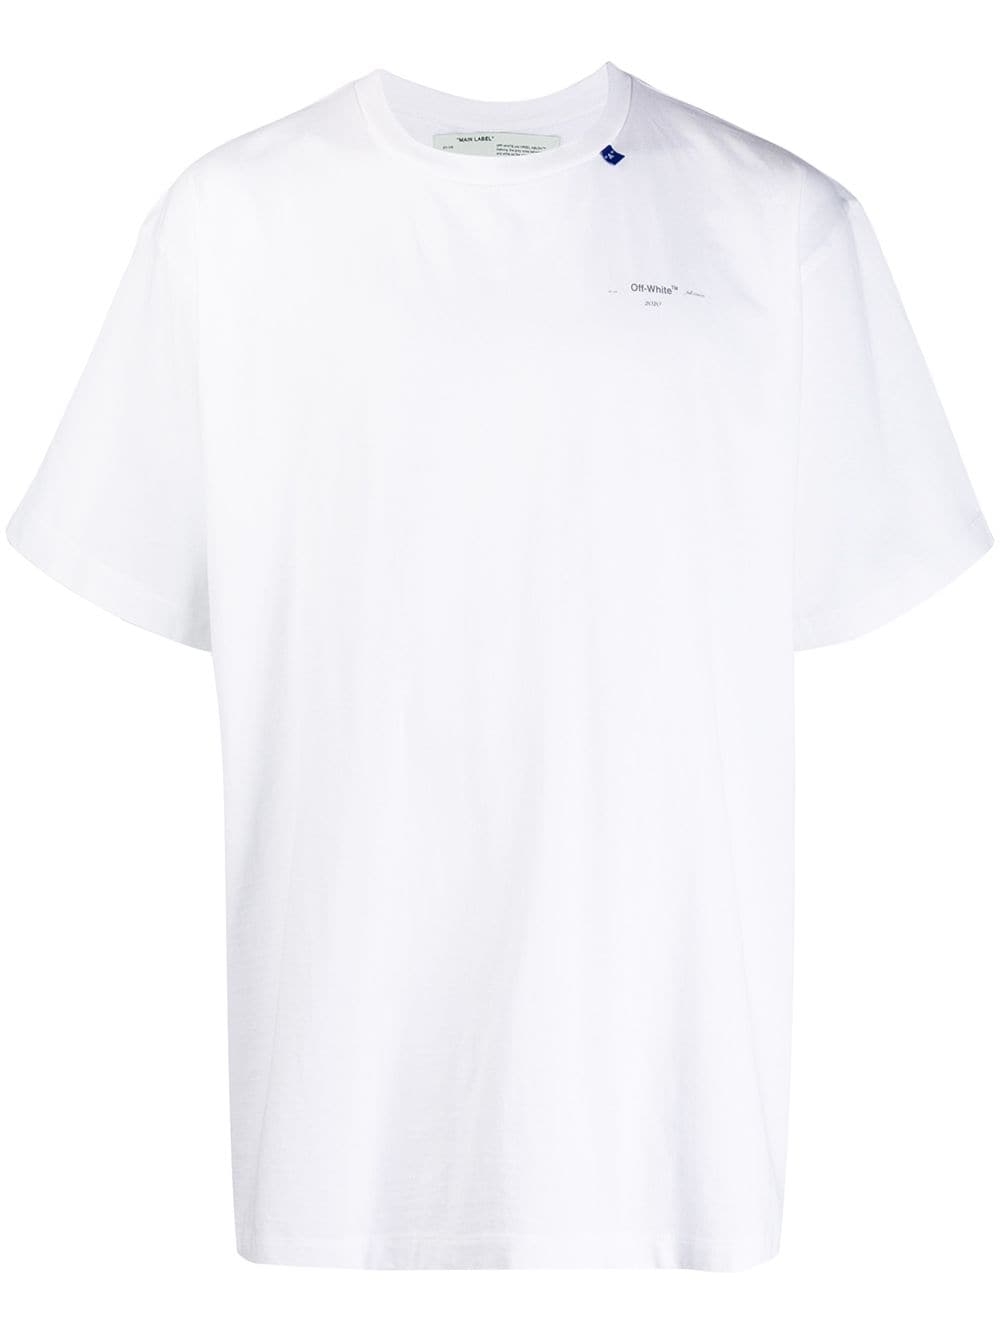 OFF-WHITE Oversized Fit Unfinished T-Shirt White/Black